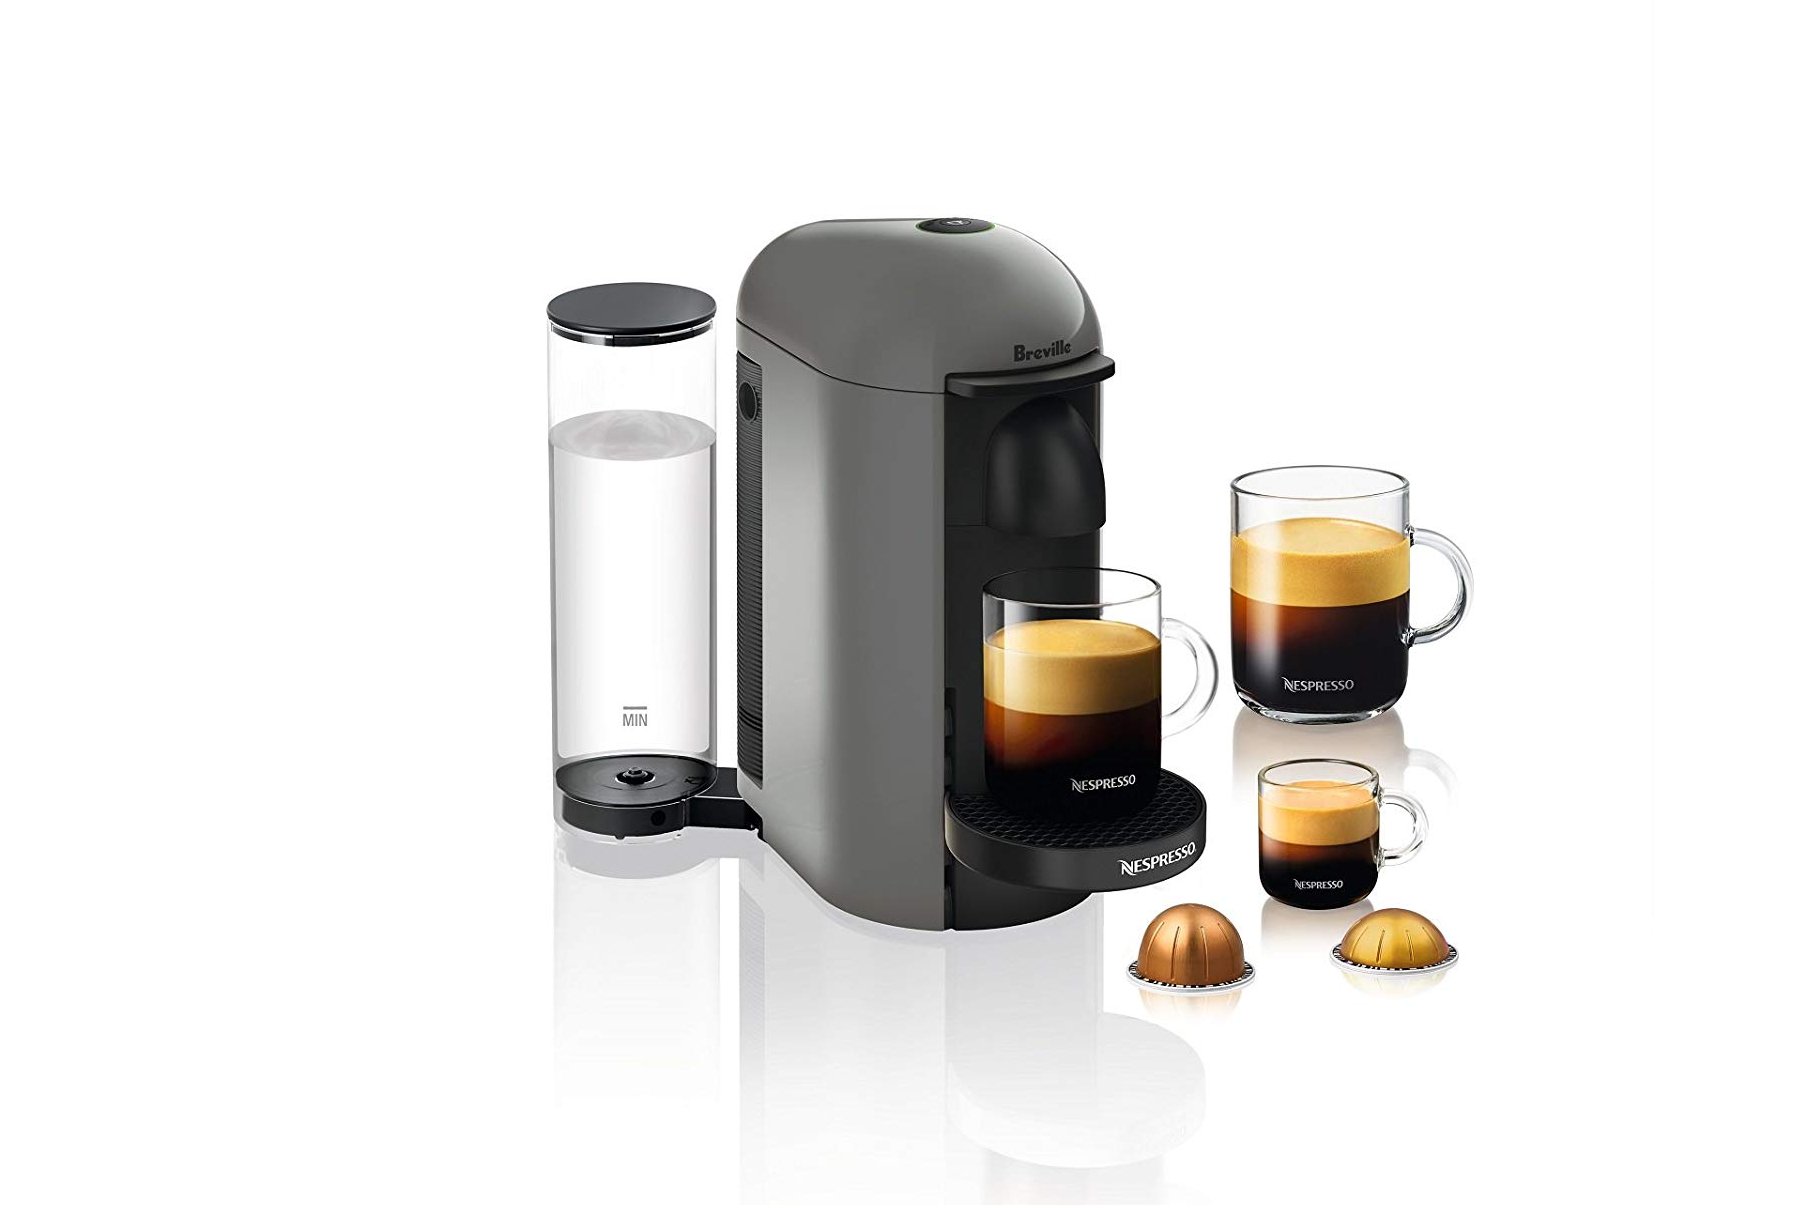 https://www.digitaltrends.com/wp-content/uploads/2019/12/breville-bnv420gry1buc1-vertuoplus-coffee-and-espresso-machine-in-gray-1.jpg?p=1